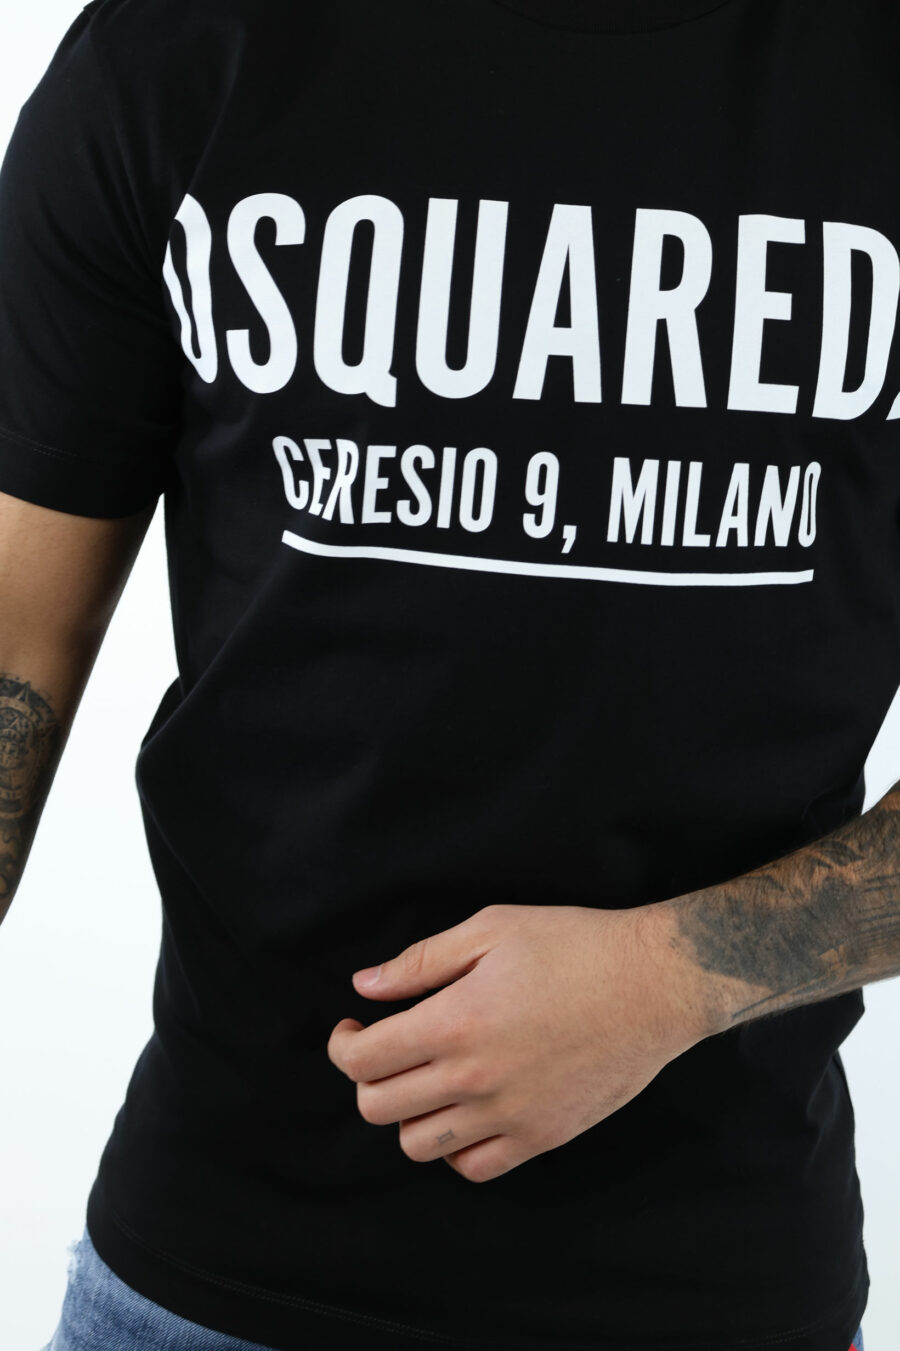 Camiseta negra con maxilogo "ceresio 9 milano" - 106863